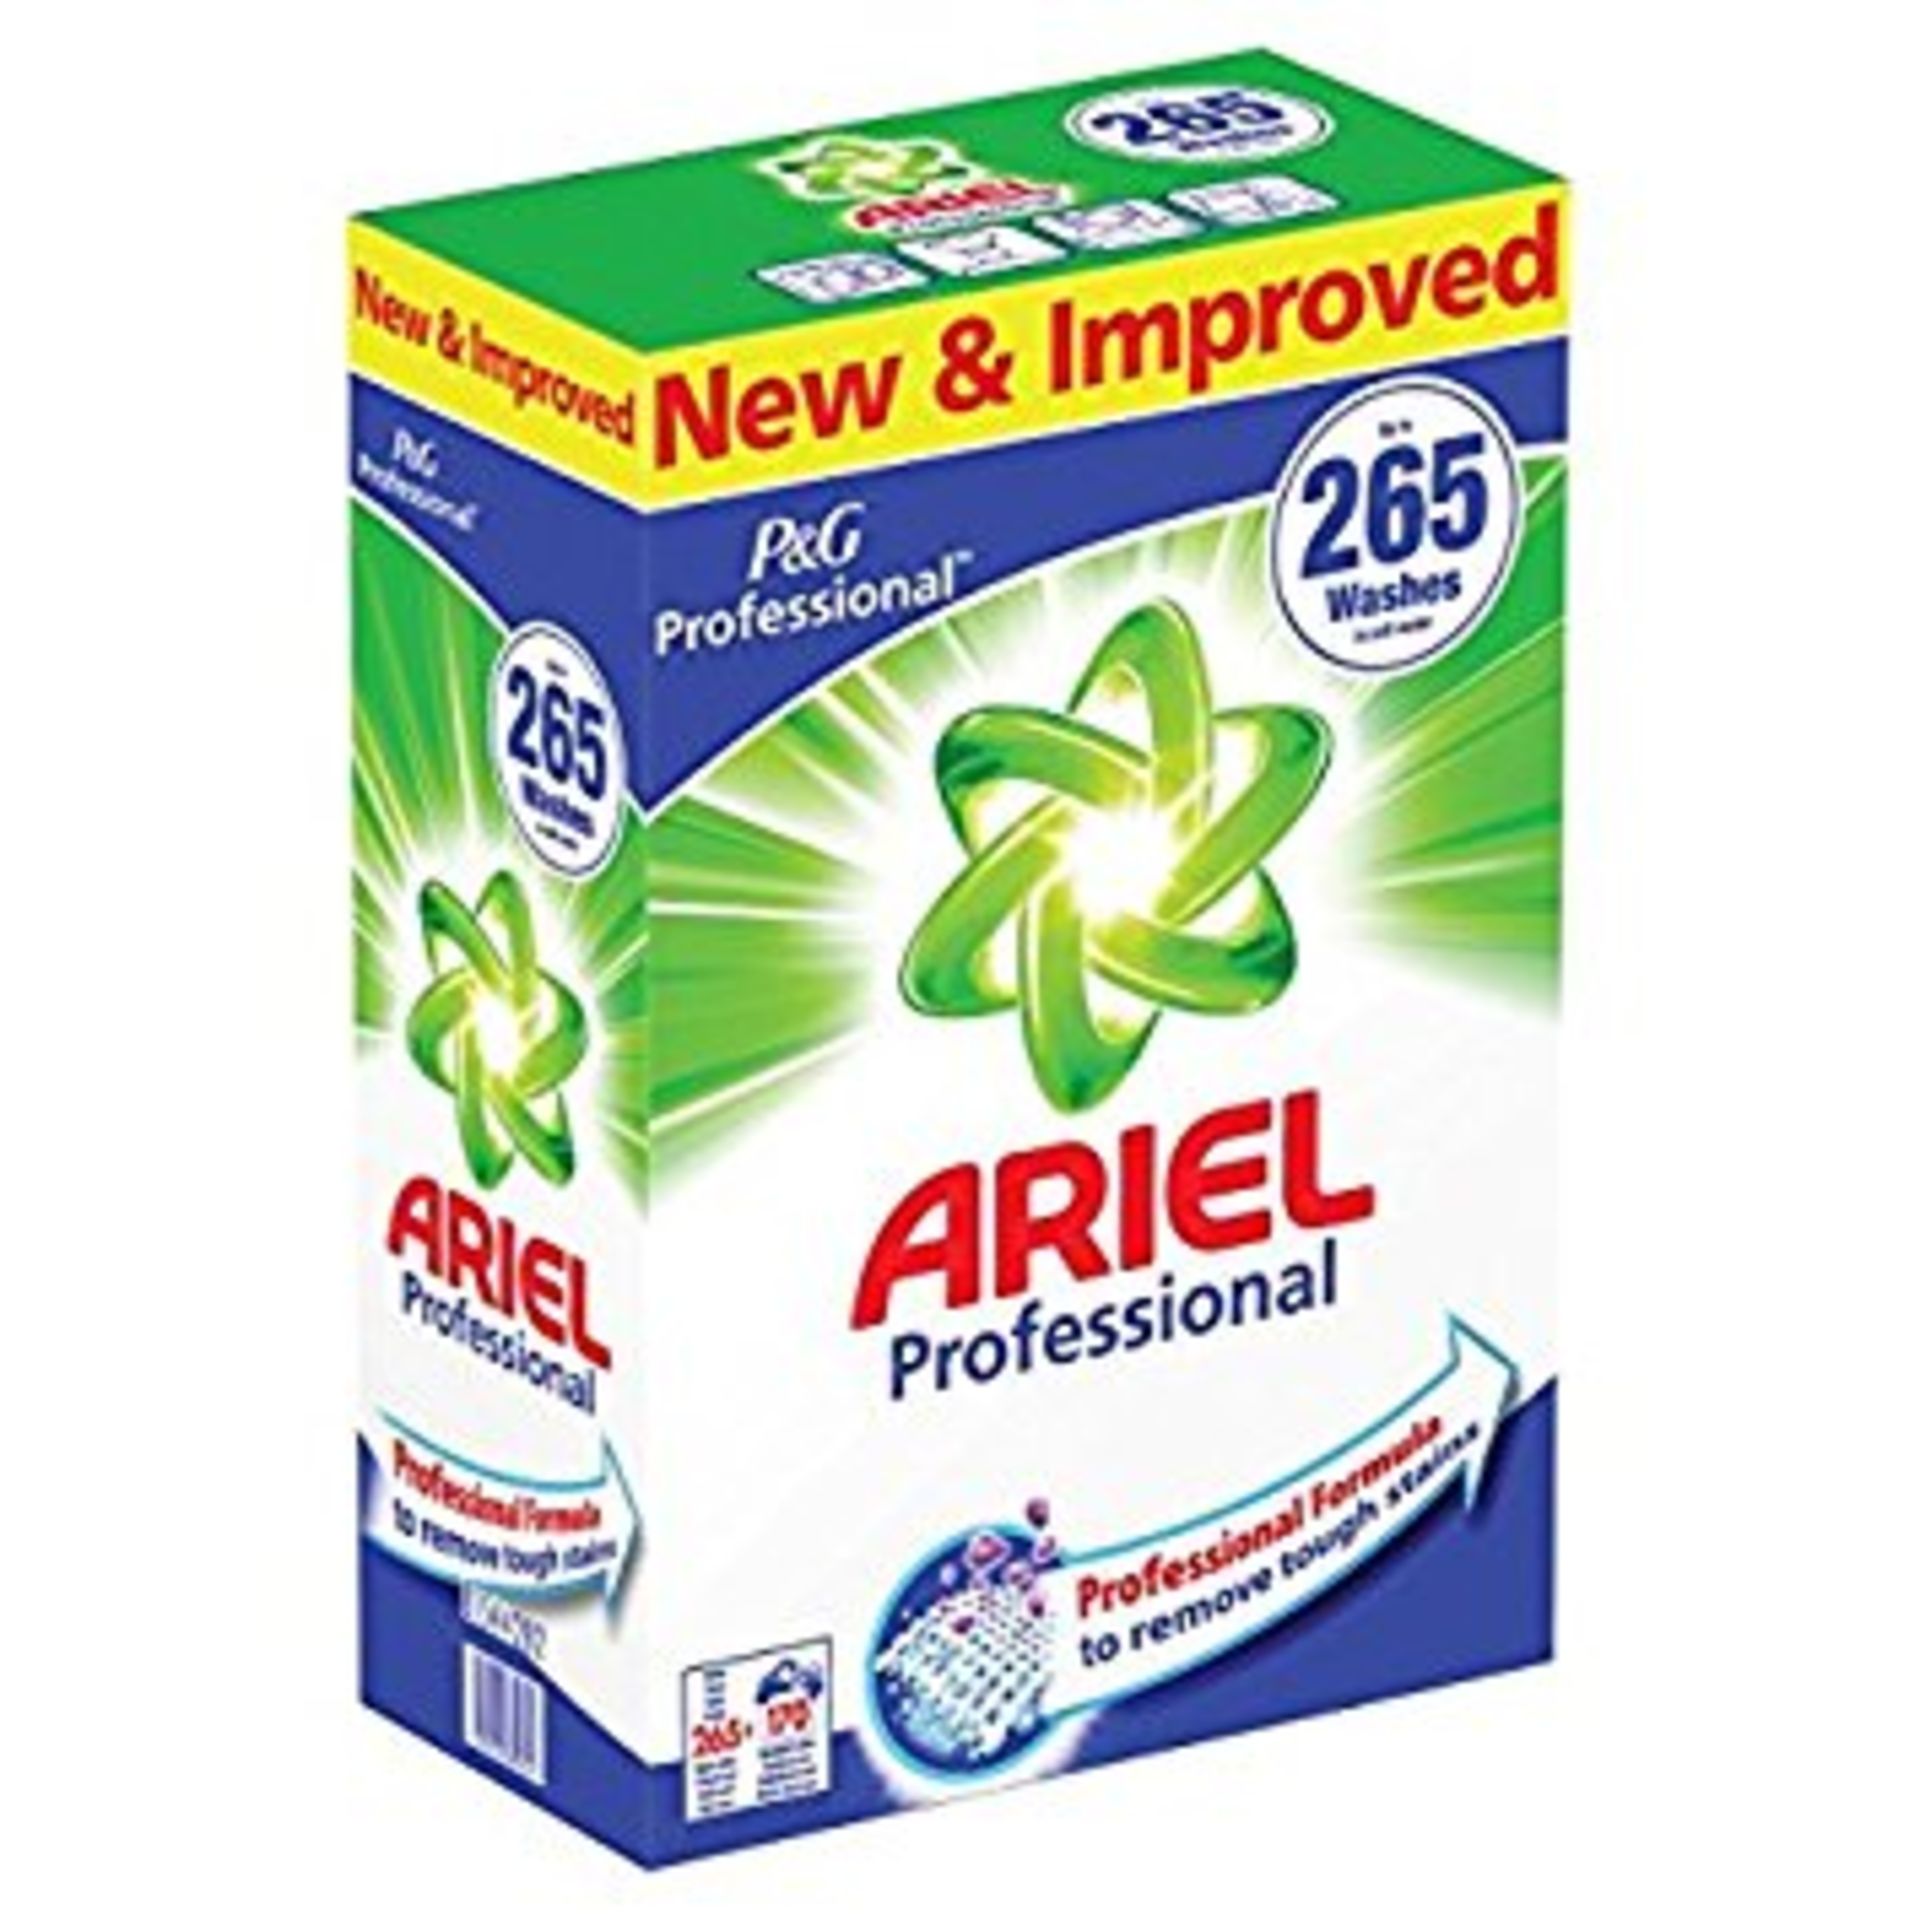 V Brand New Ariel Professional XXL 265 Washes Washing Powder